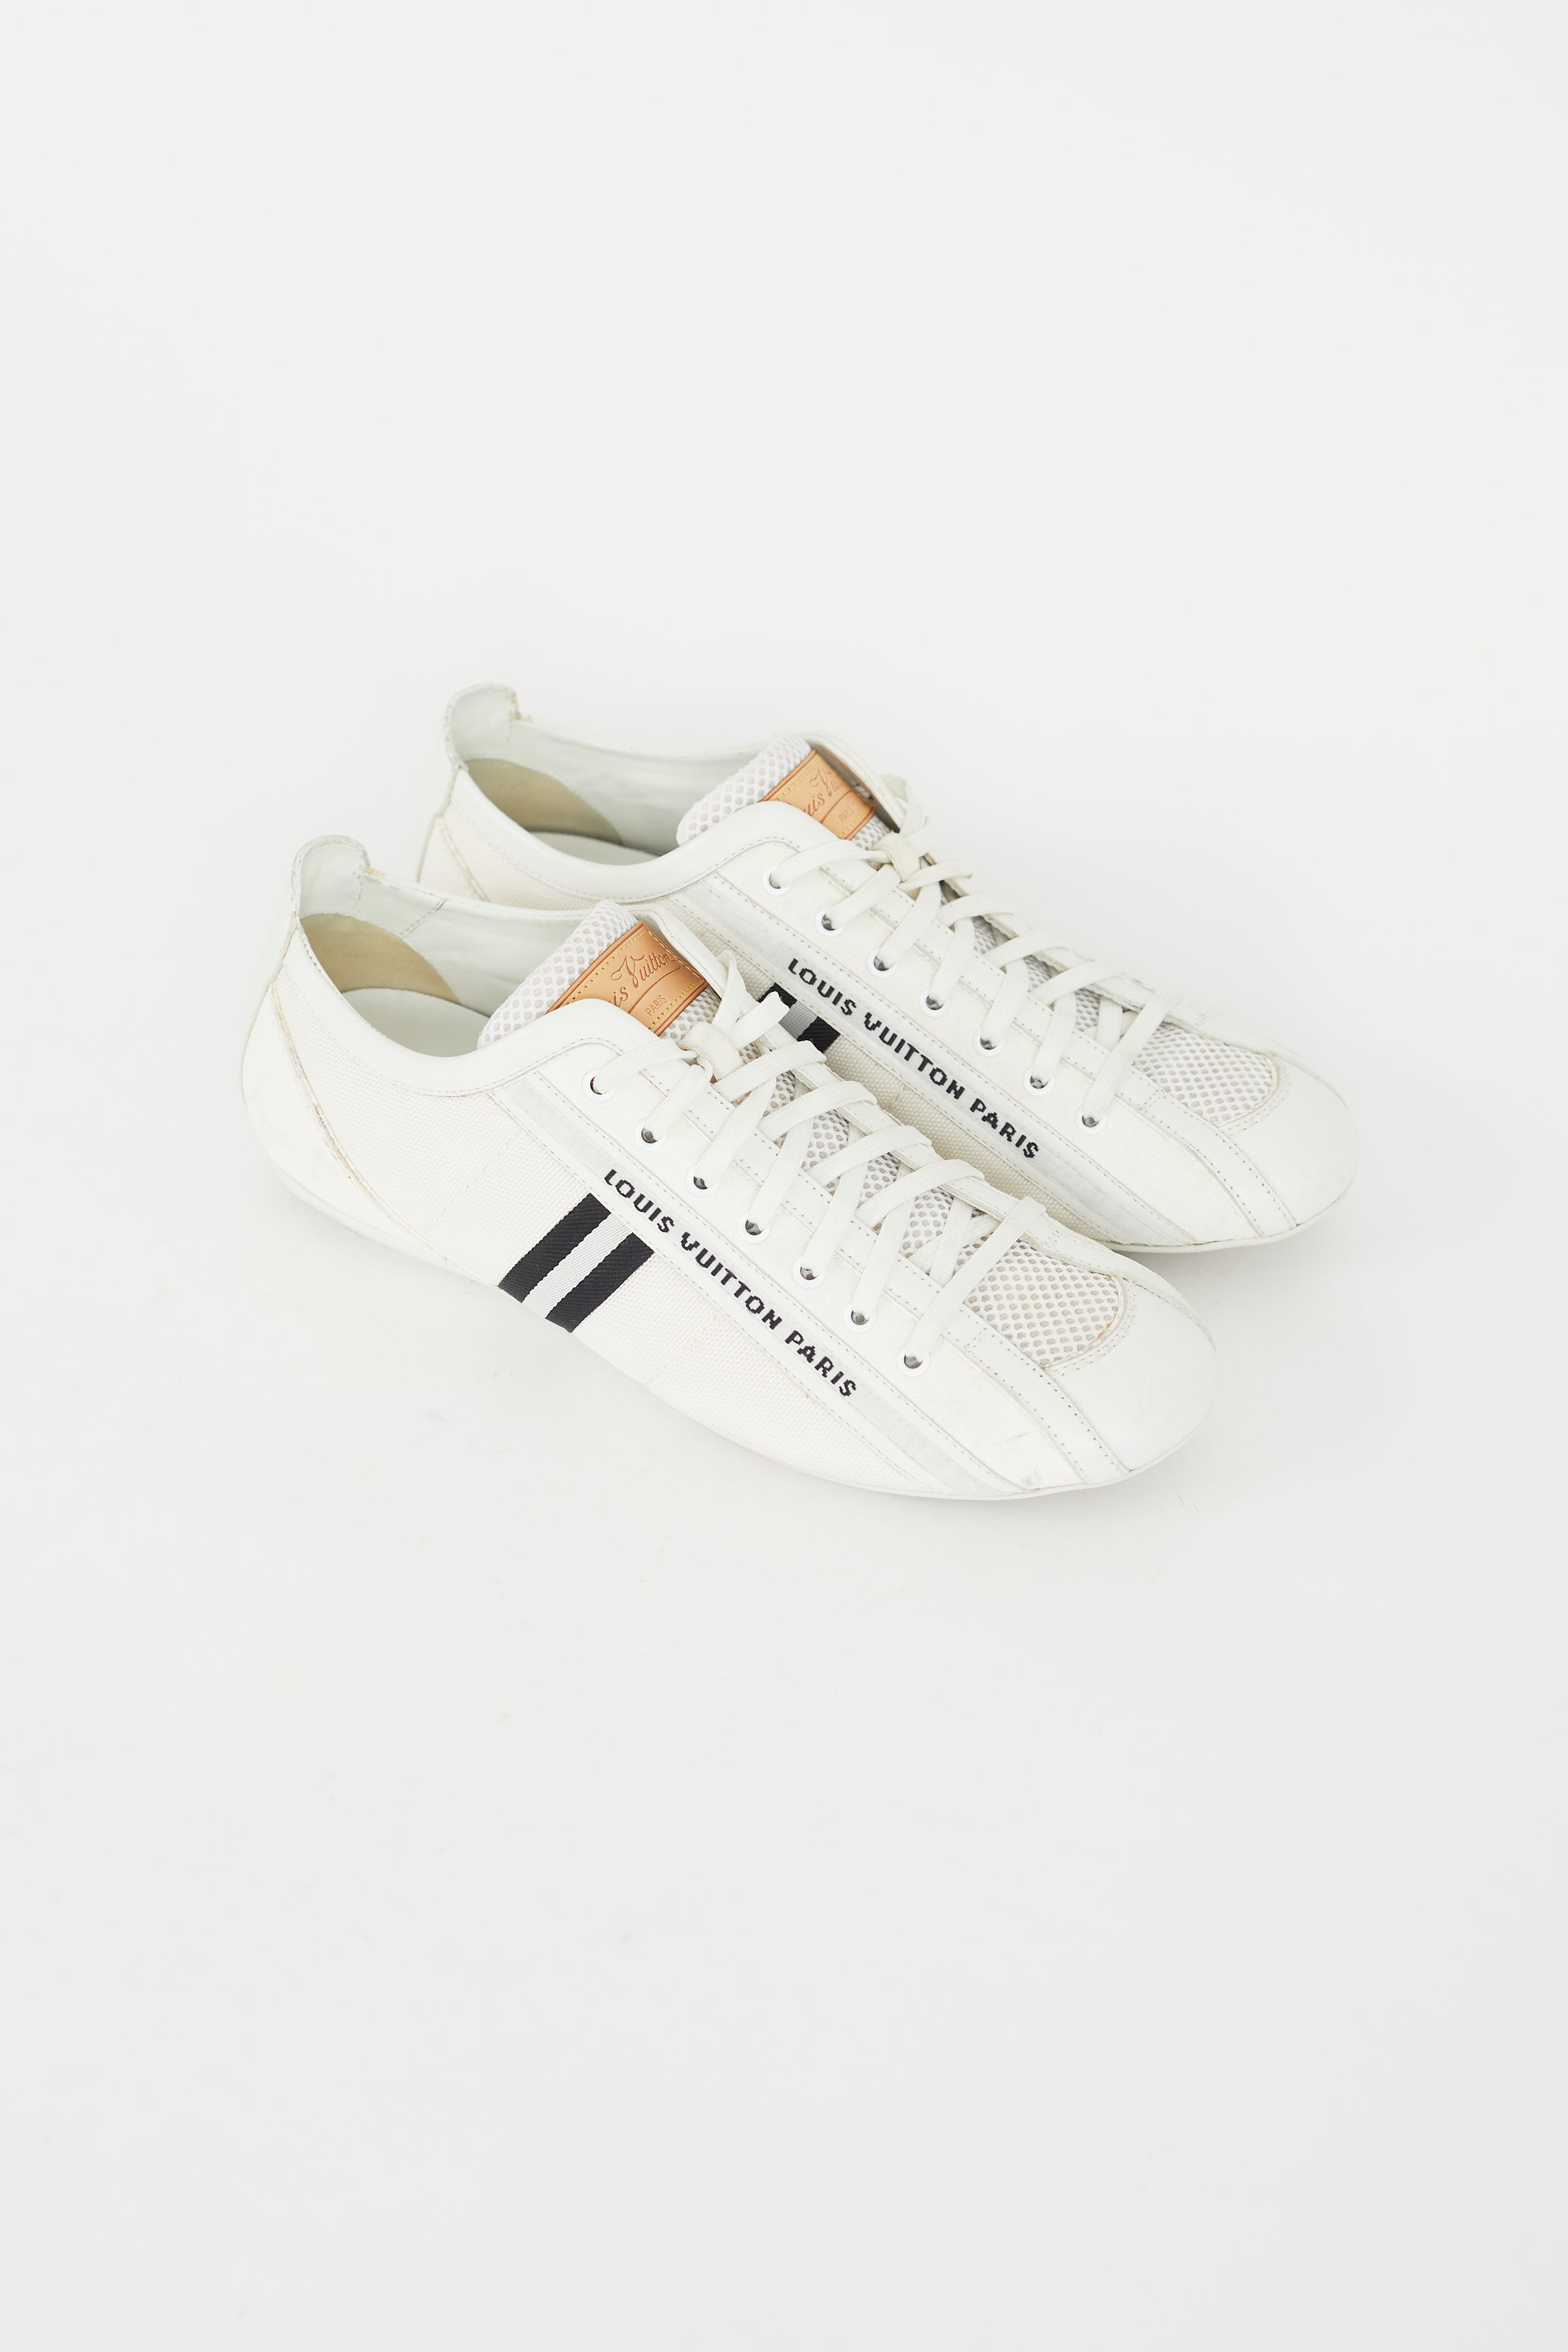 Louis Vuitton White Leather Sneakers UK 9.5 | 10.5